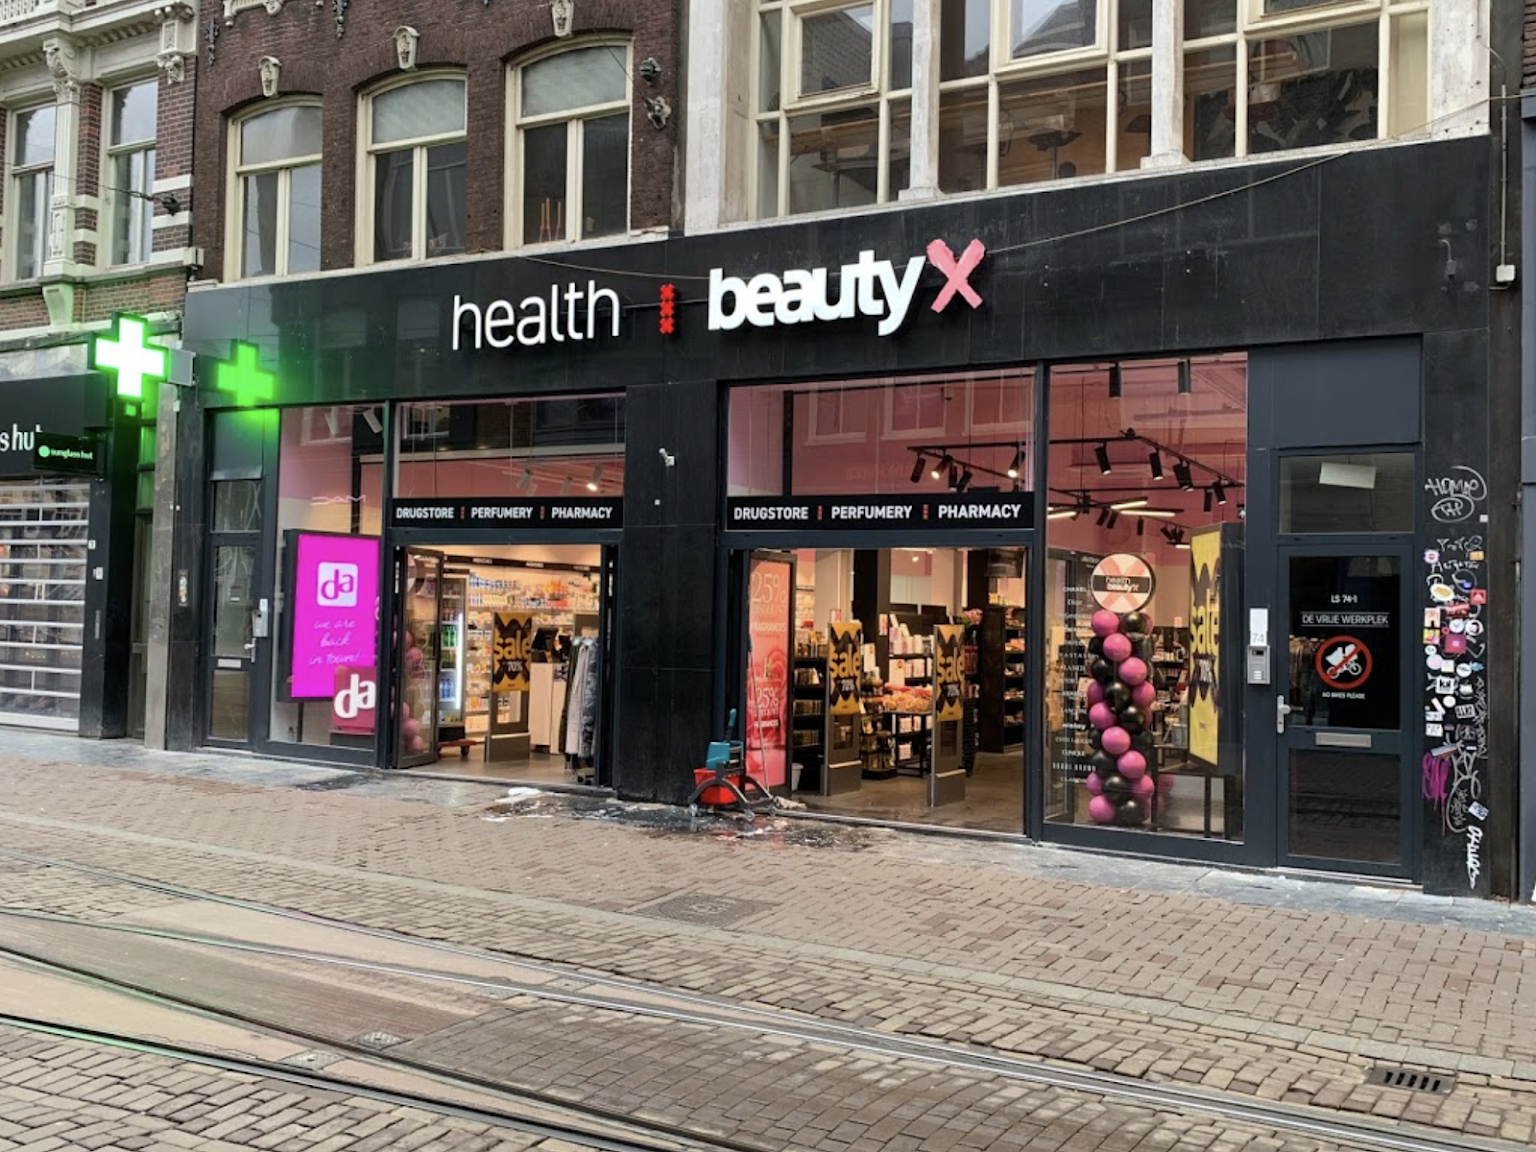 Health&beauty-X